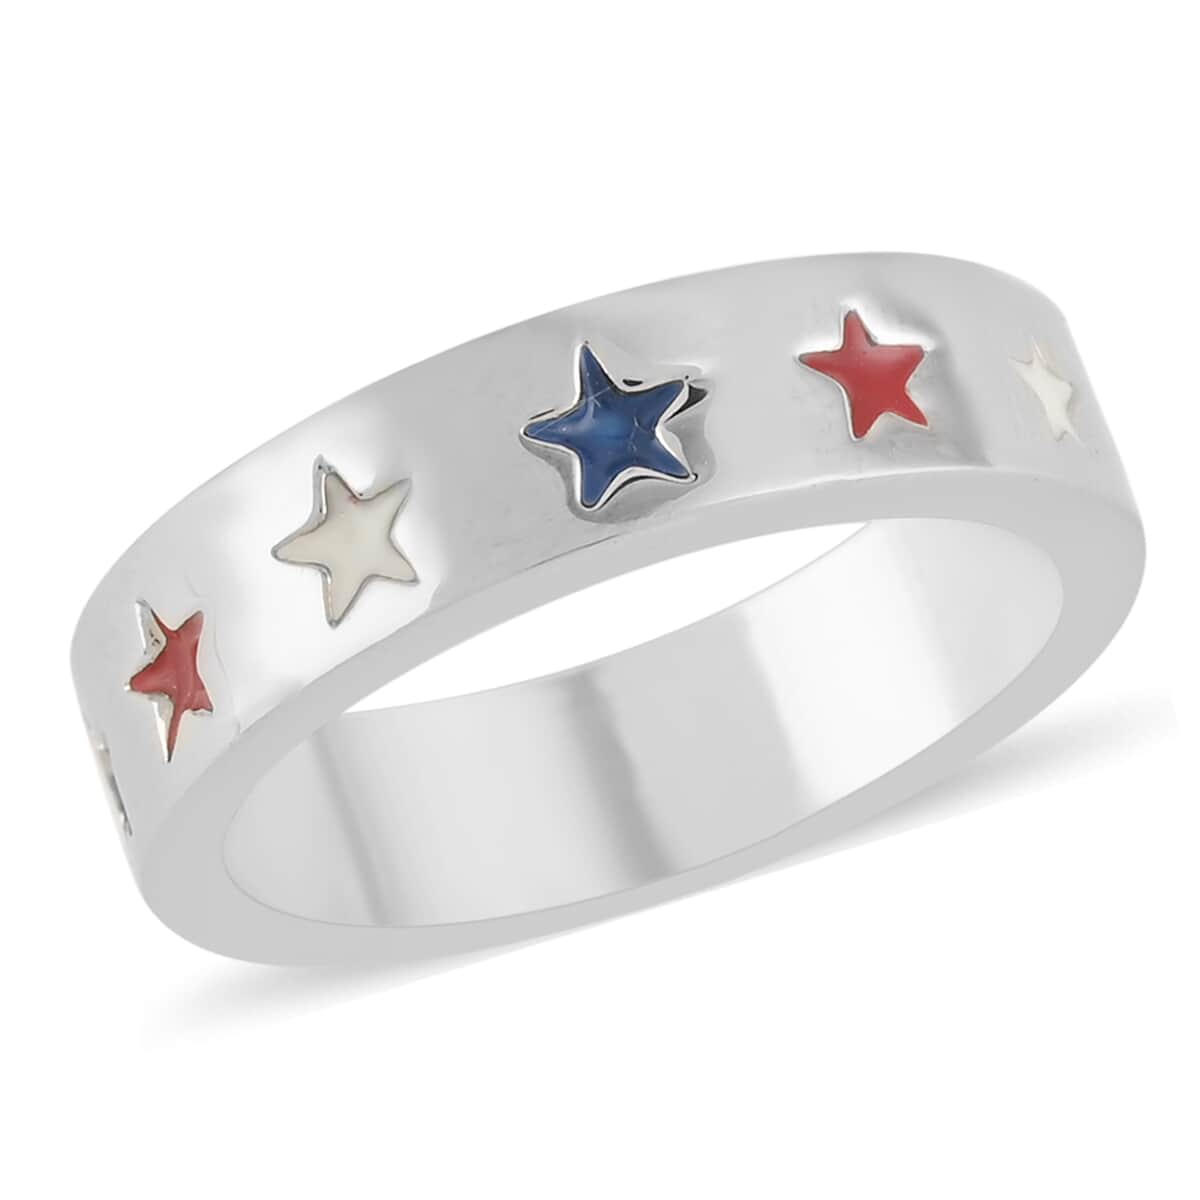 MARVEL Captain America Multi-Color Star Ring in Silvertone (Size 7.0) image number 0